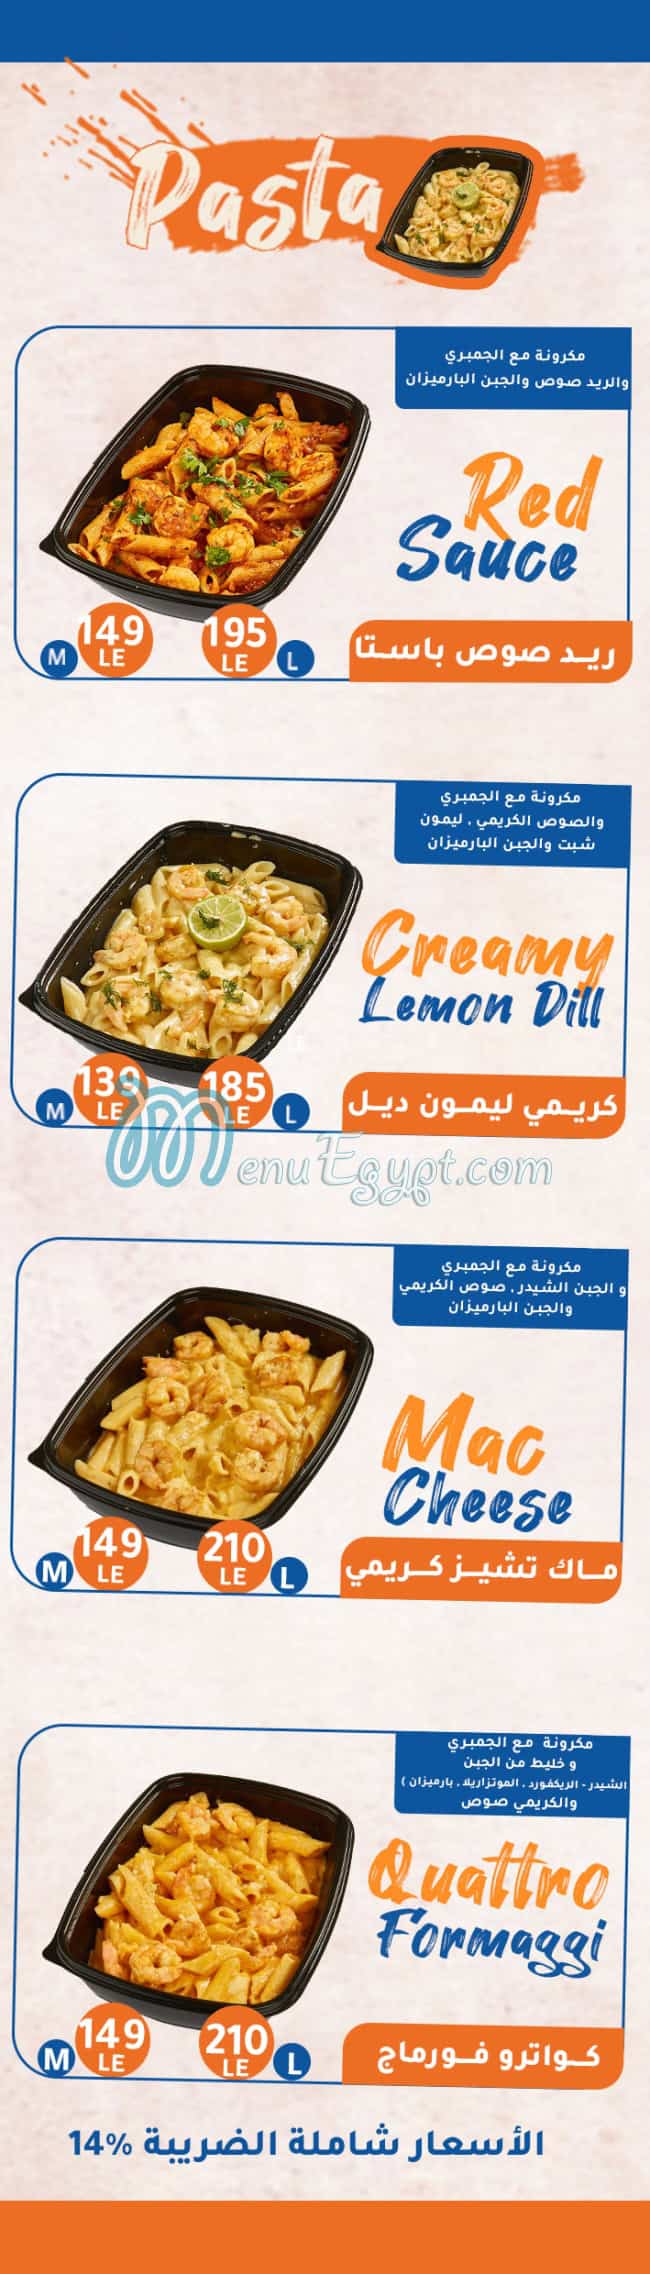 Balad El Gharieb menu prices